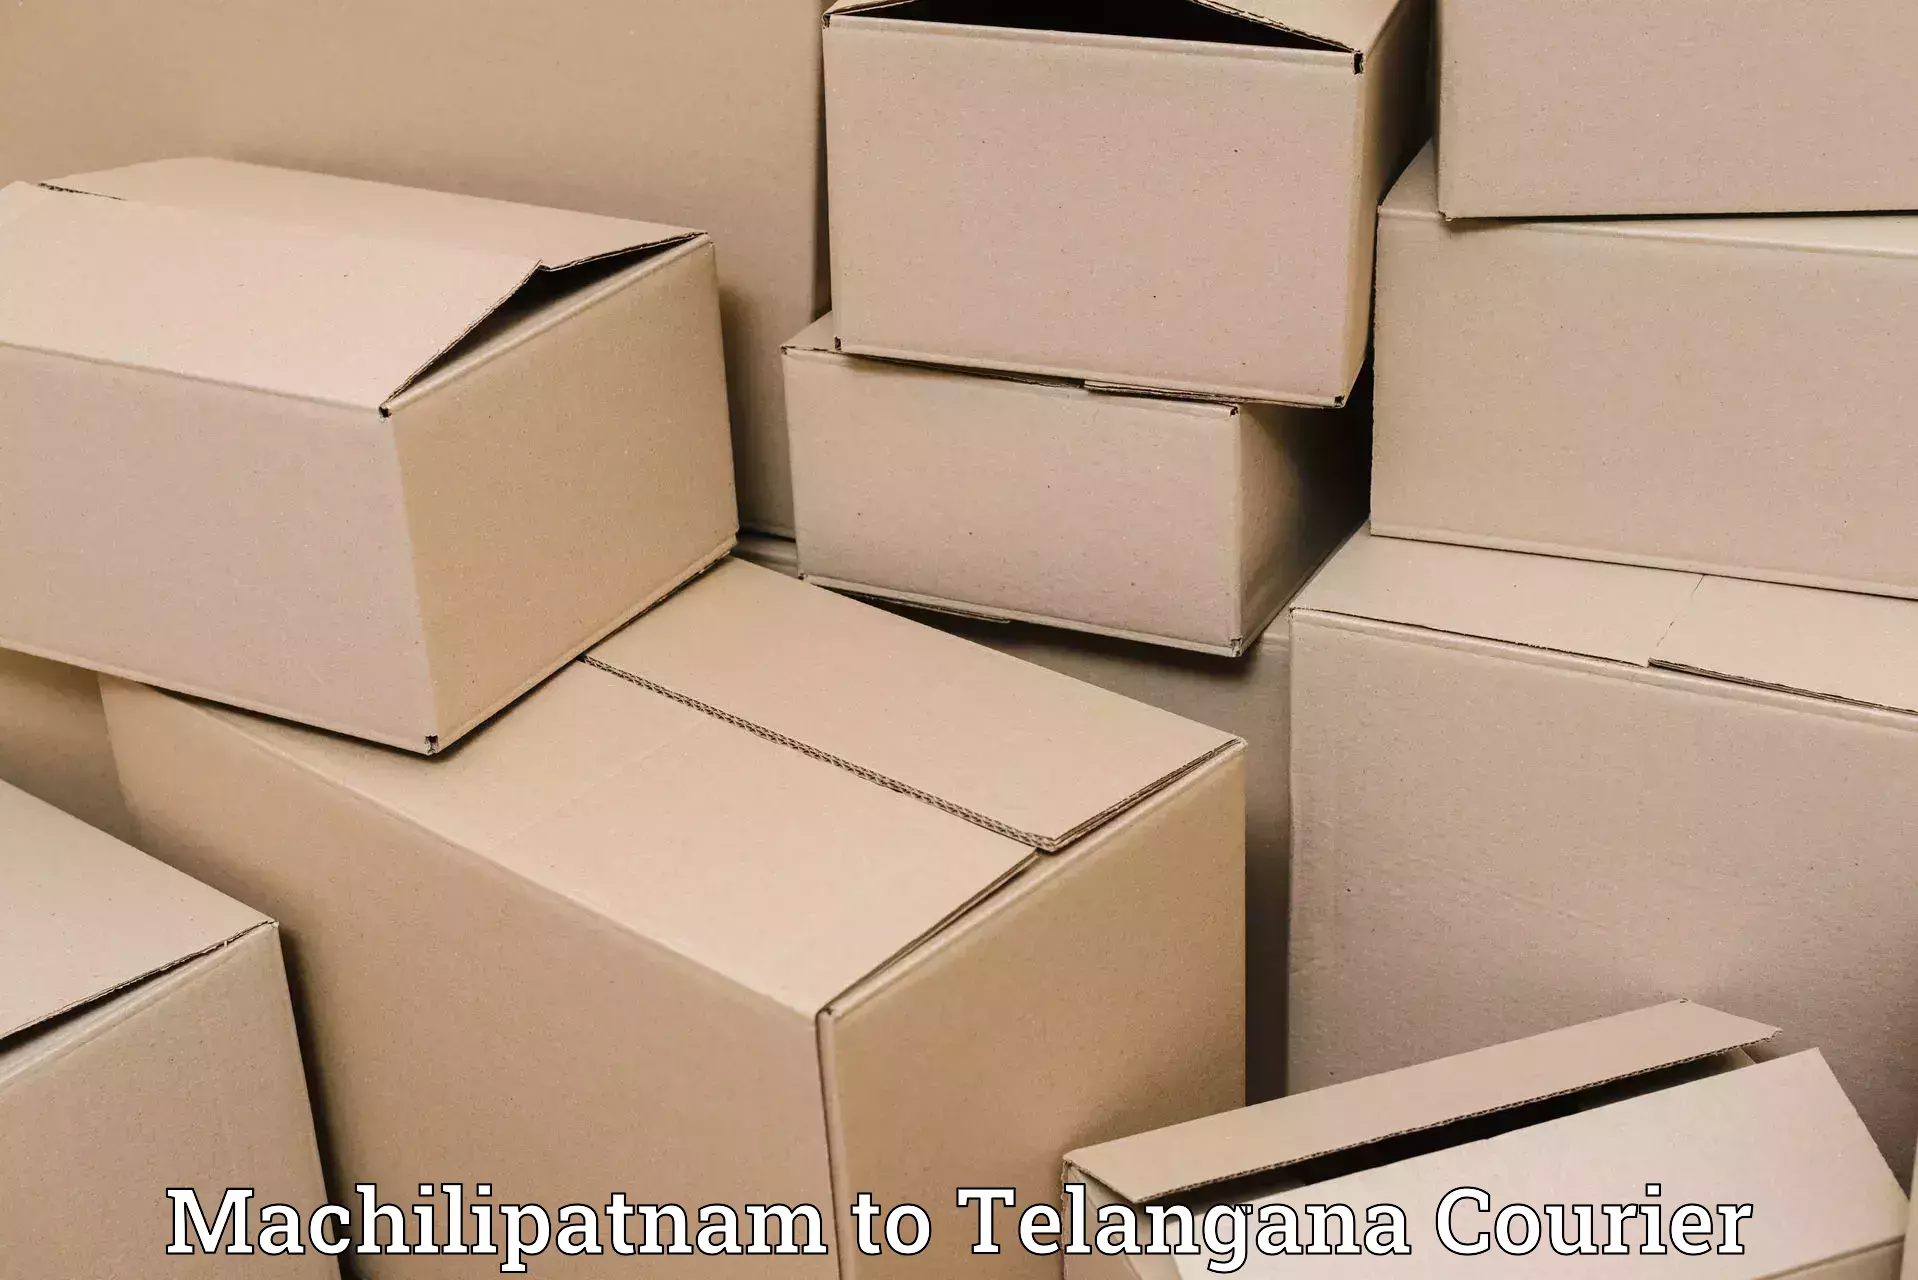 Nationwide delivery network Machilipatnam to Yellandu